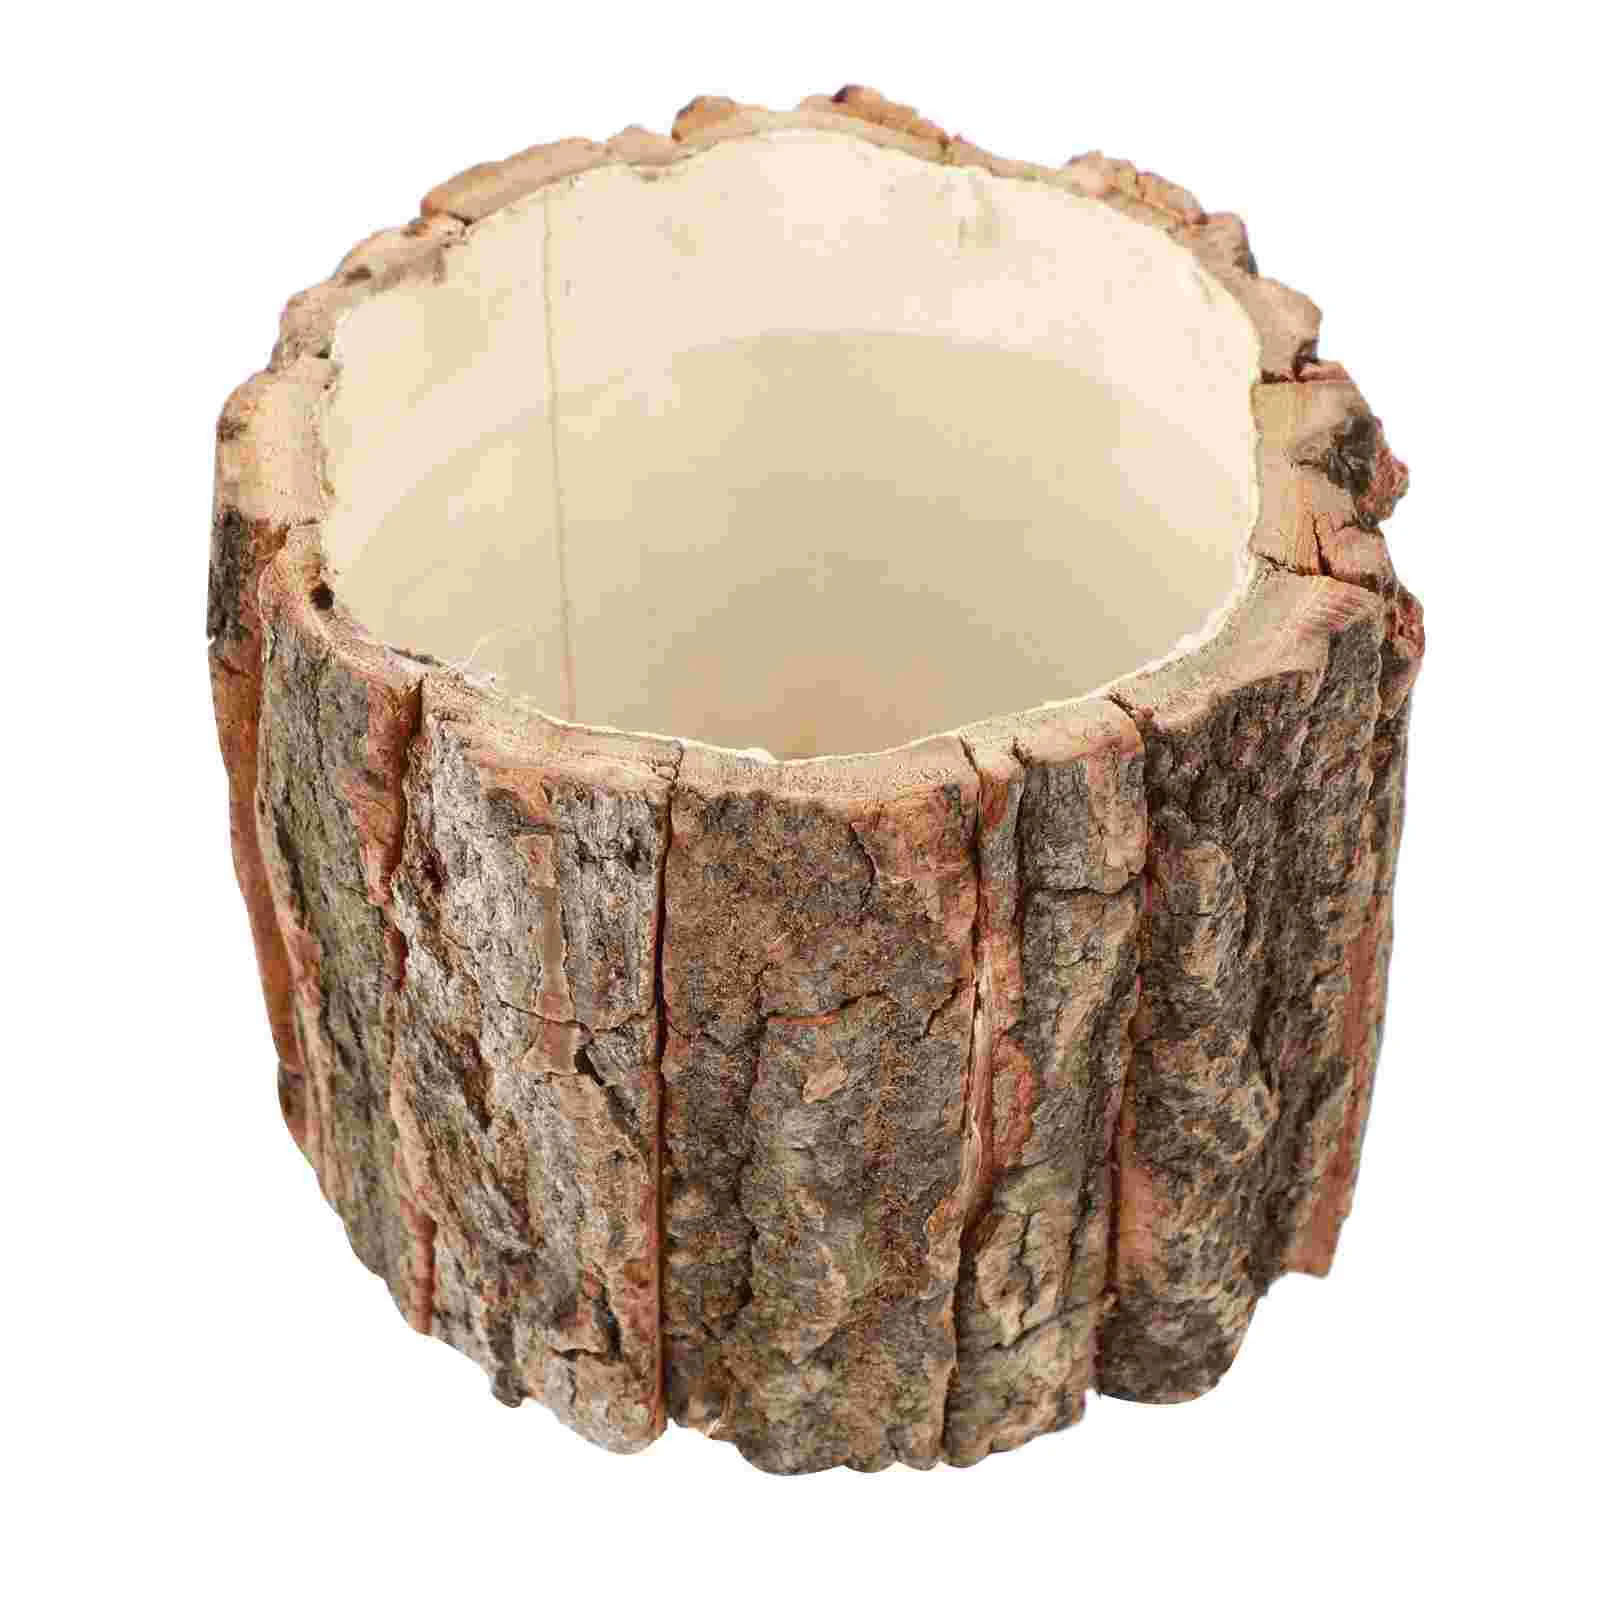 Купи Flower Planter Pot Wooden Wood Succulent Bucket Vase Stump Rustic Log Bark Container Pots Tree Farmhouse Planters Holder за 565 рублей в магазине AliExpress